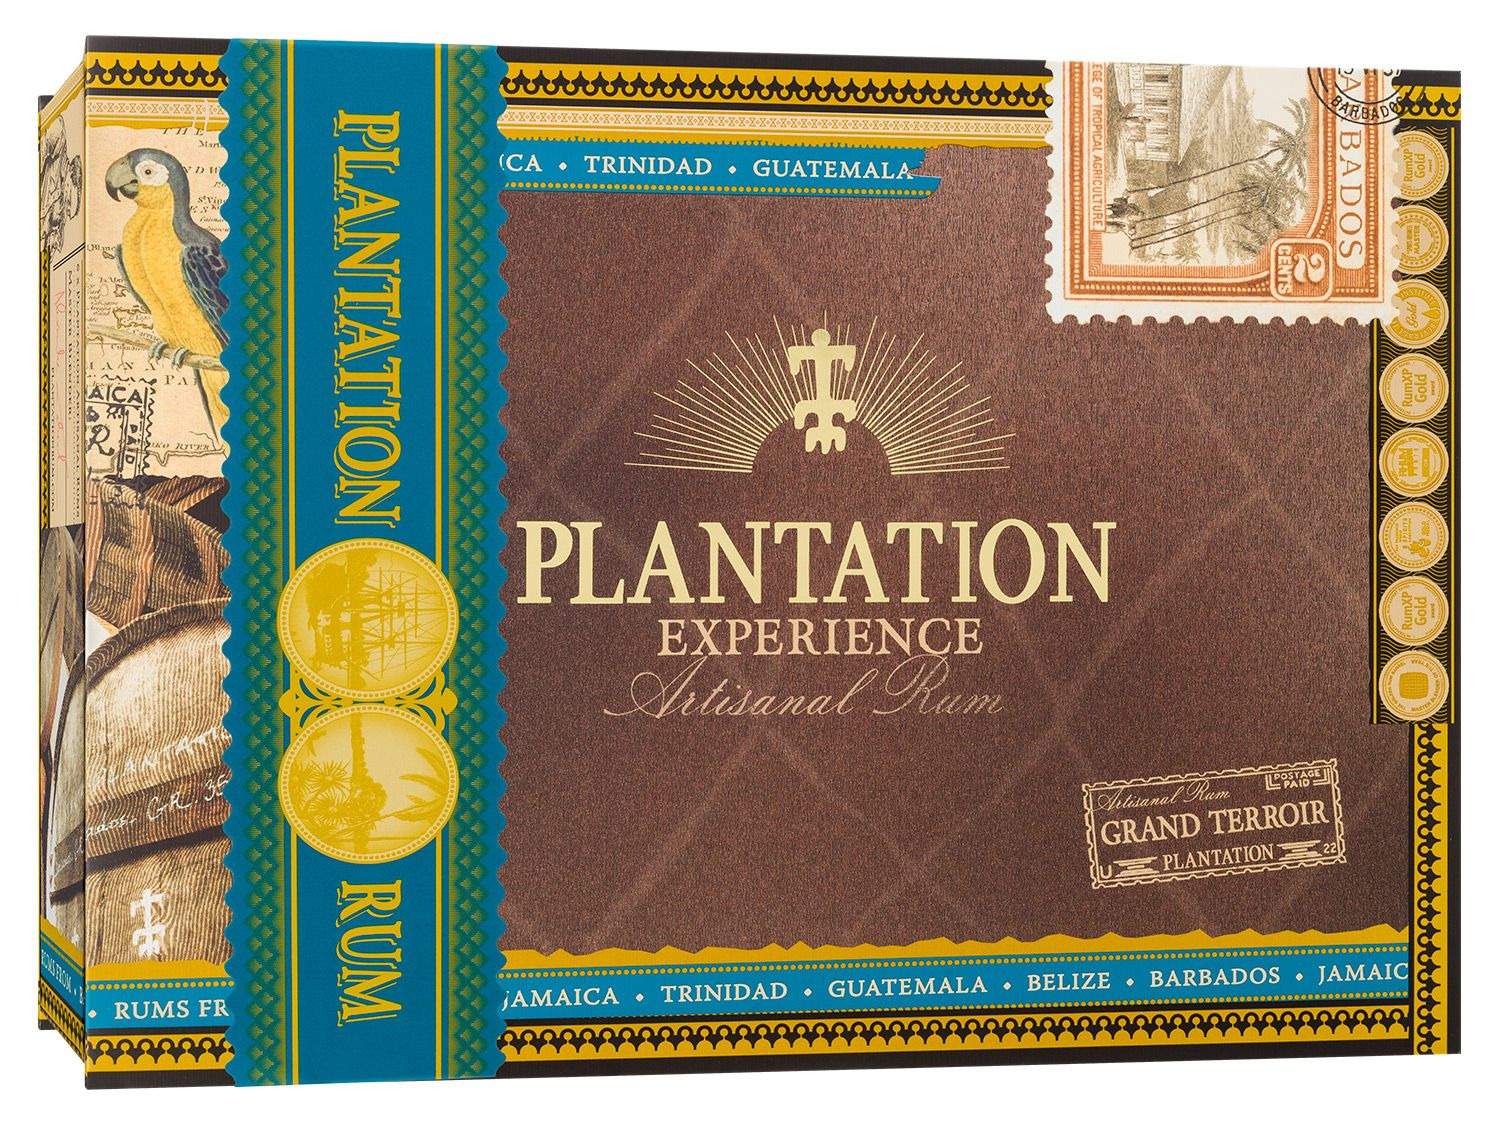 % Experience-Box Plantation 0,1l, 40-43 Vol 6 Rum x